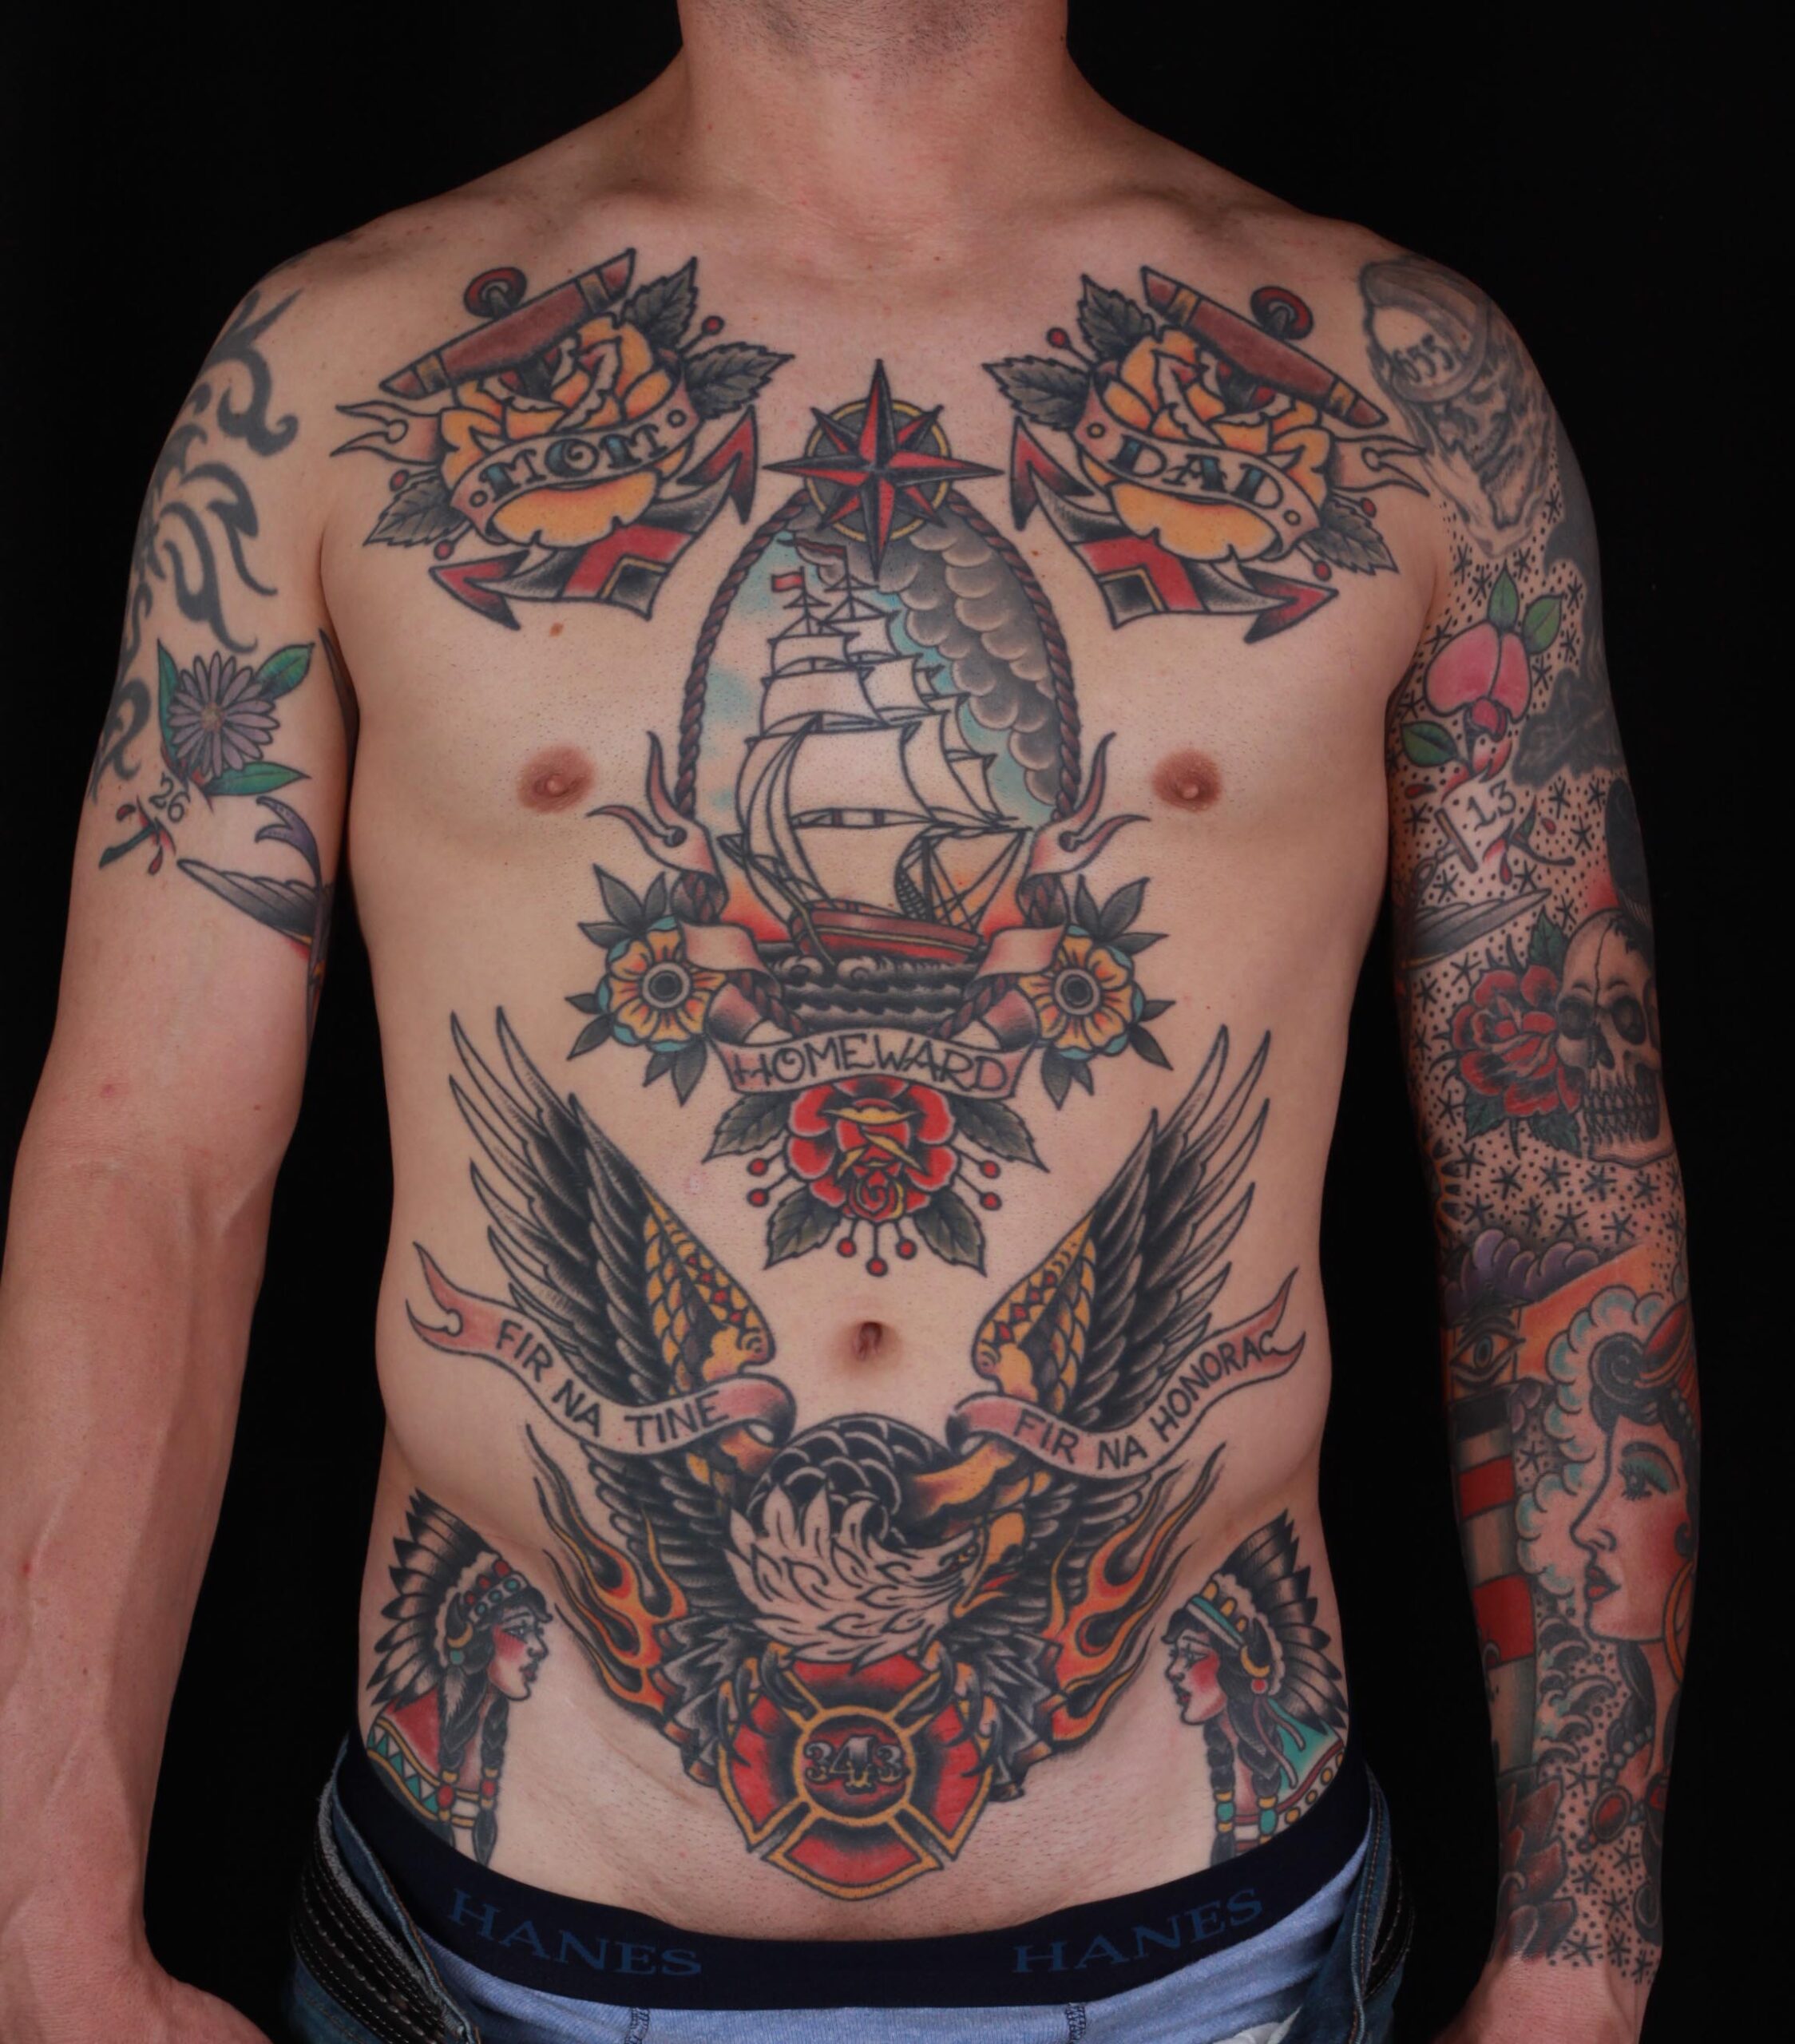 150 Stomach Tattoos That Will Help Make A Bold Style Statement  Wild Tattoo  Art